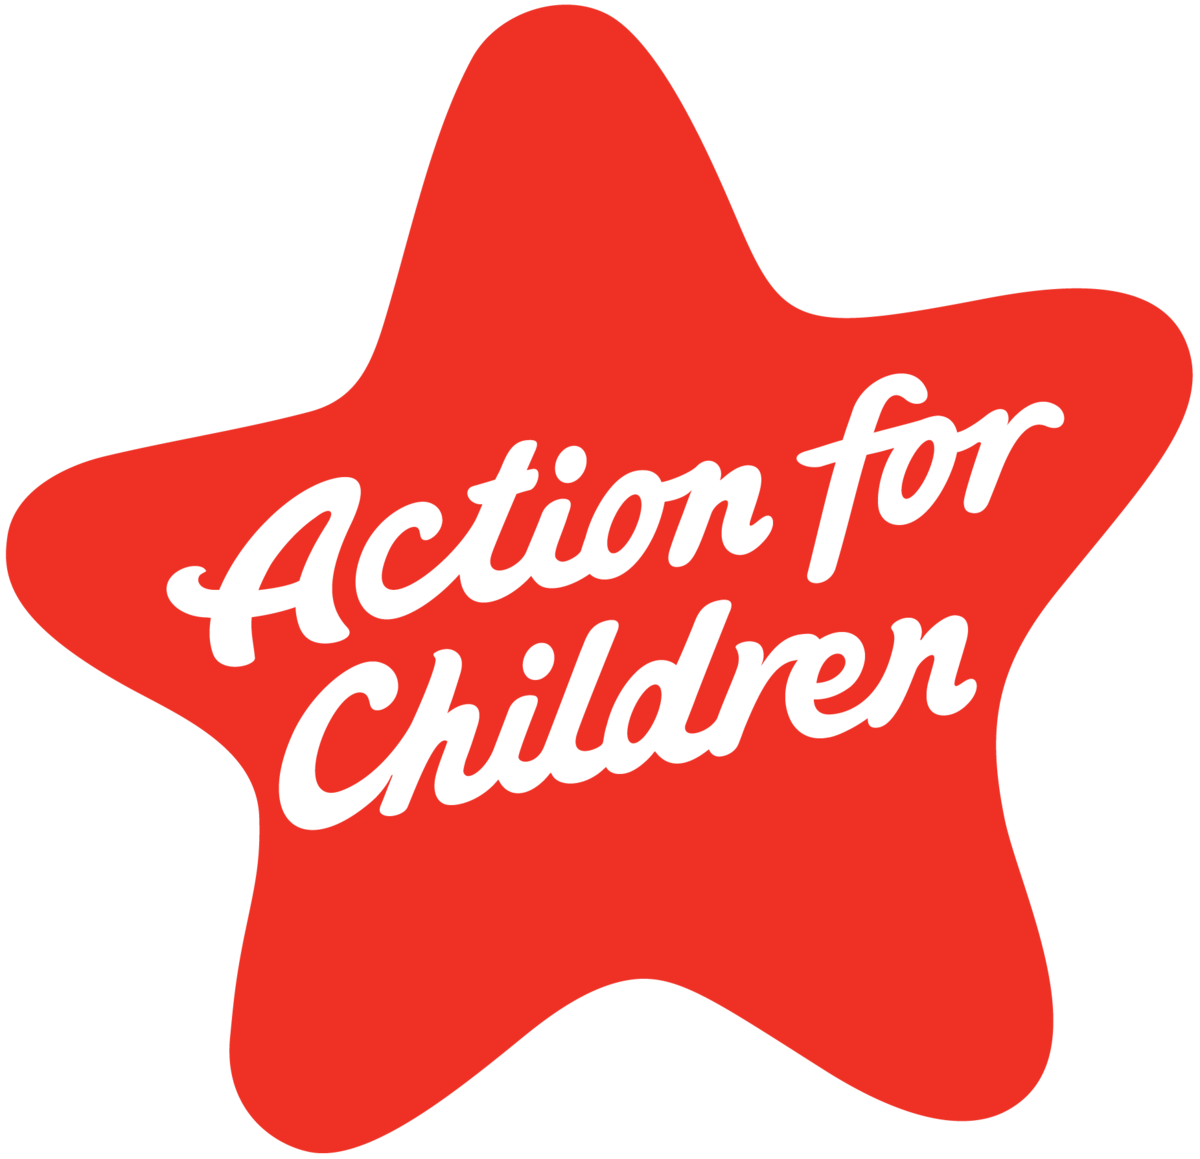 Action for Children - Wikipedia